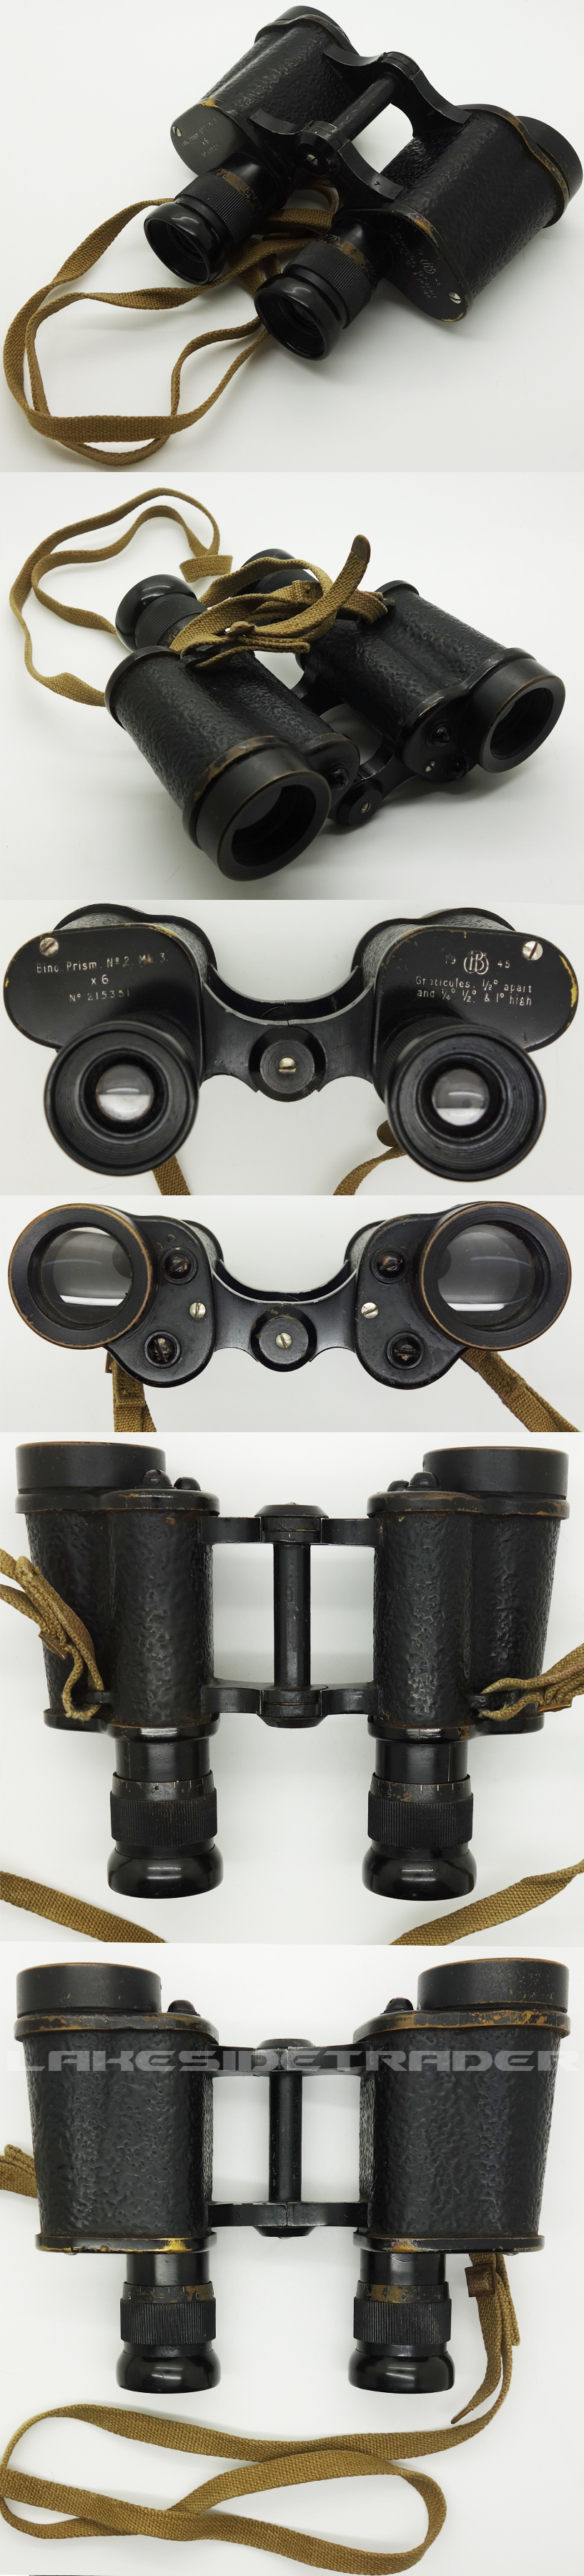 Watson Baker 6x30 British Service Binoculars 1945